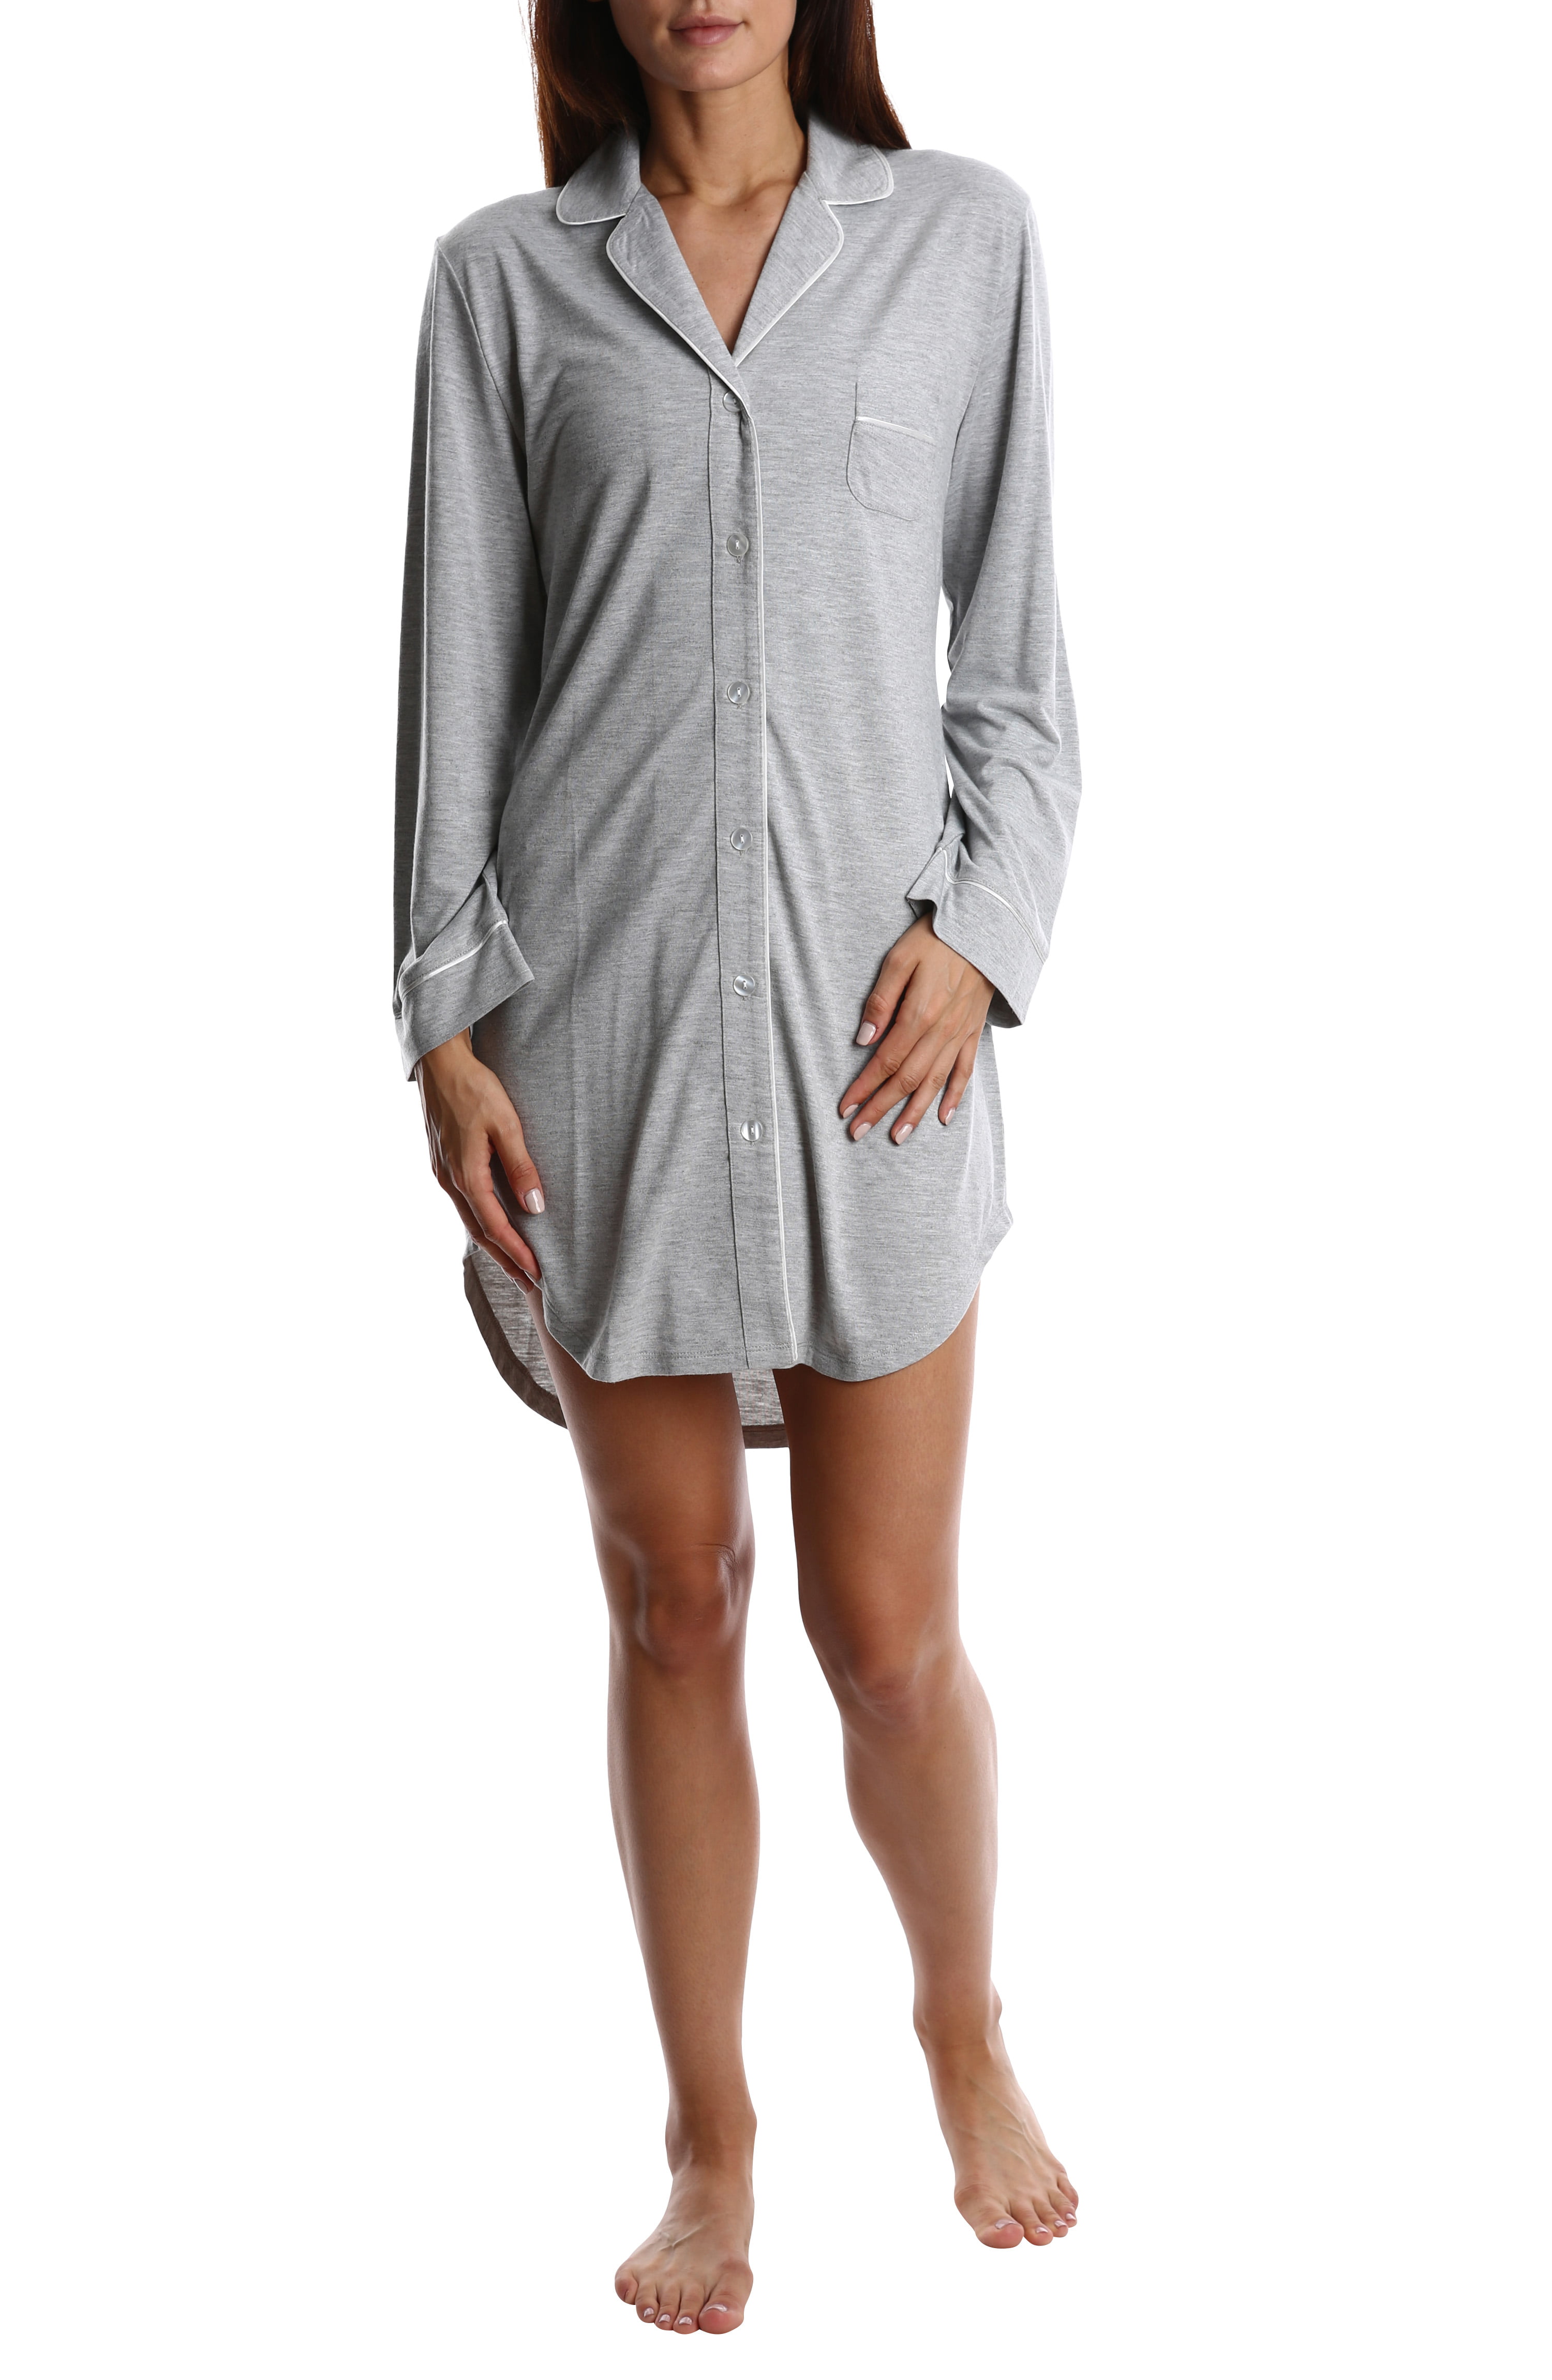 BLIS - Blis Women's Long Sleeve Button Down Sleep Shirt - Ladies Lounge